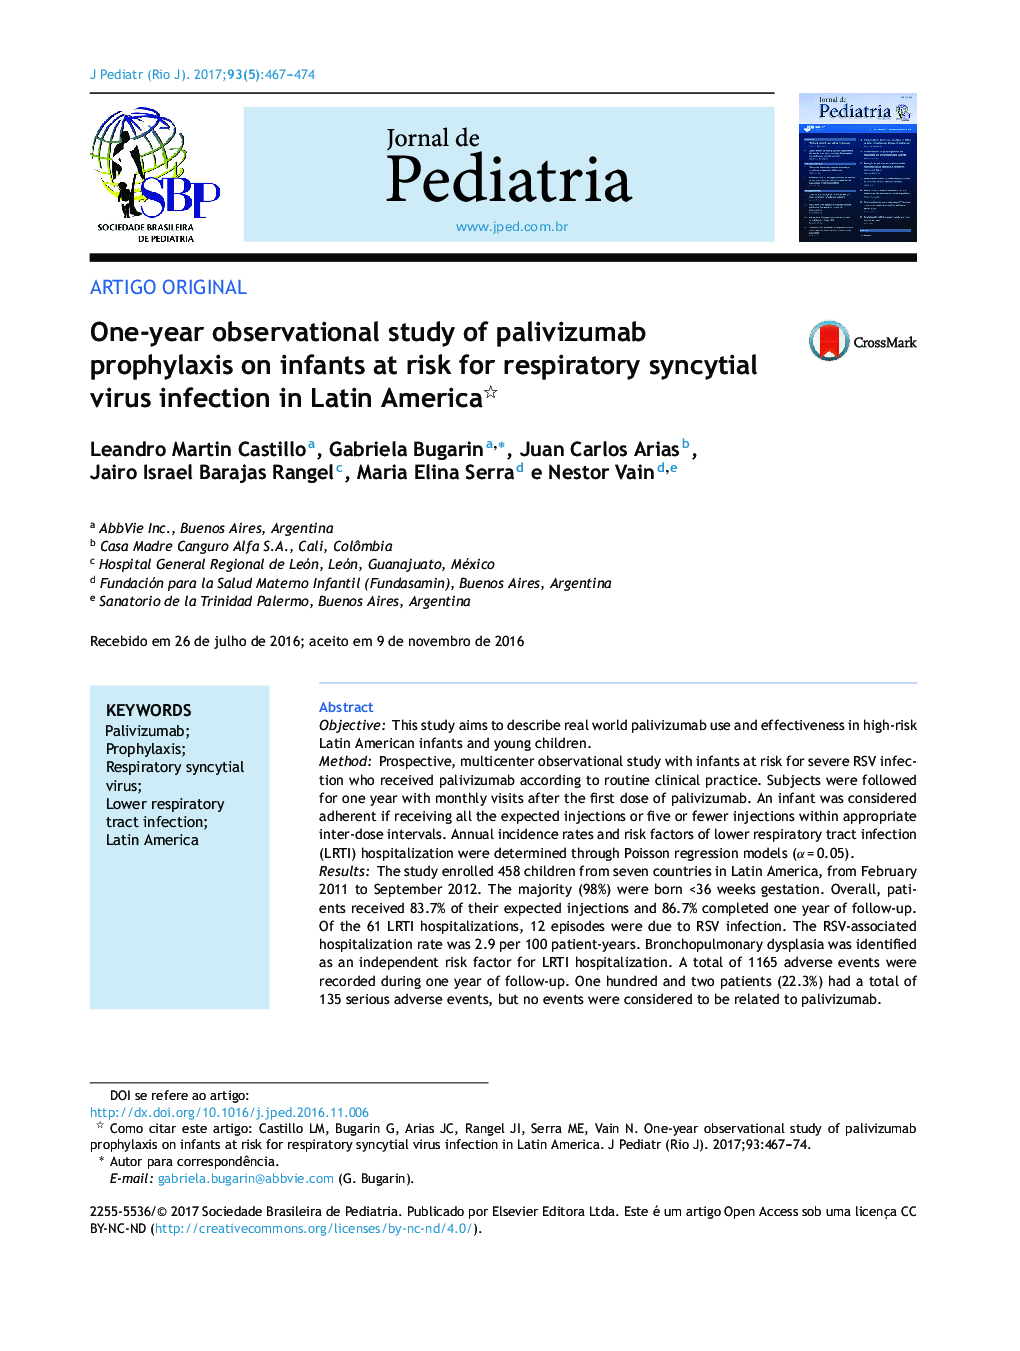 Oneâyear observational study of palivizumab prophylaxis on infants at risk for respiratory syncytial virus infection in Latin America